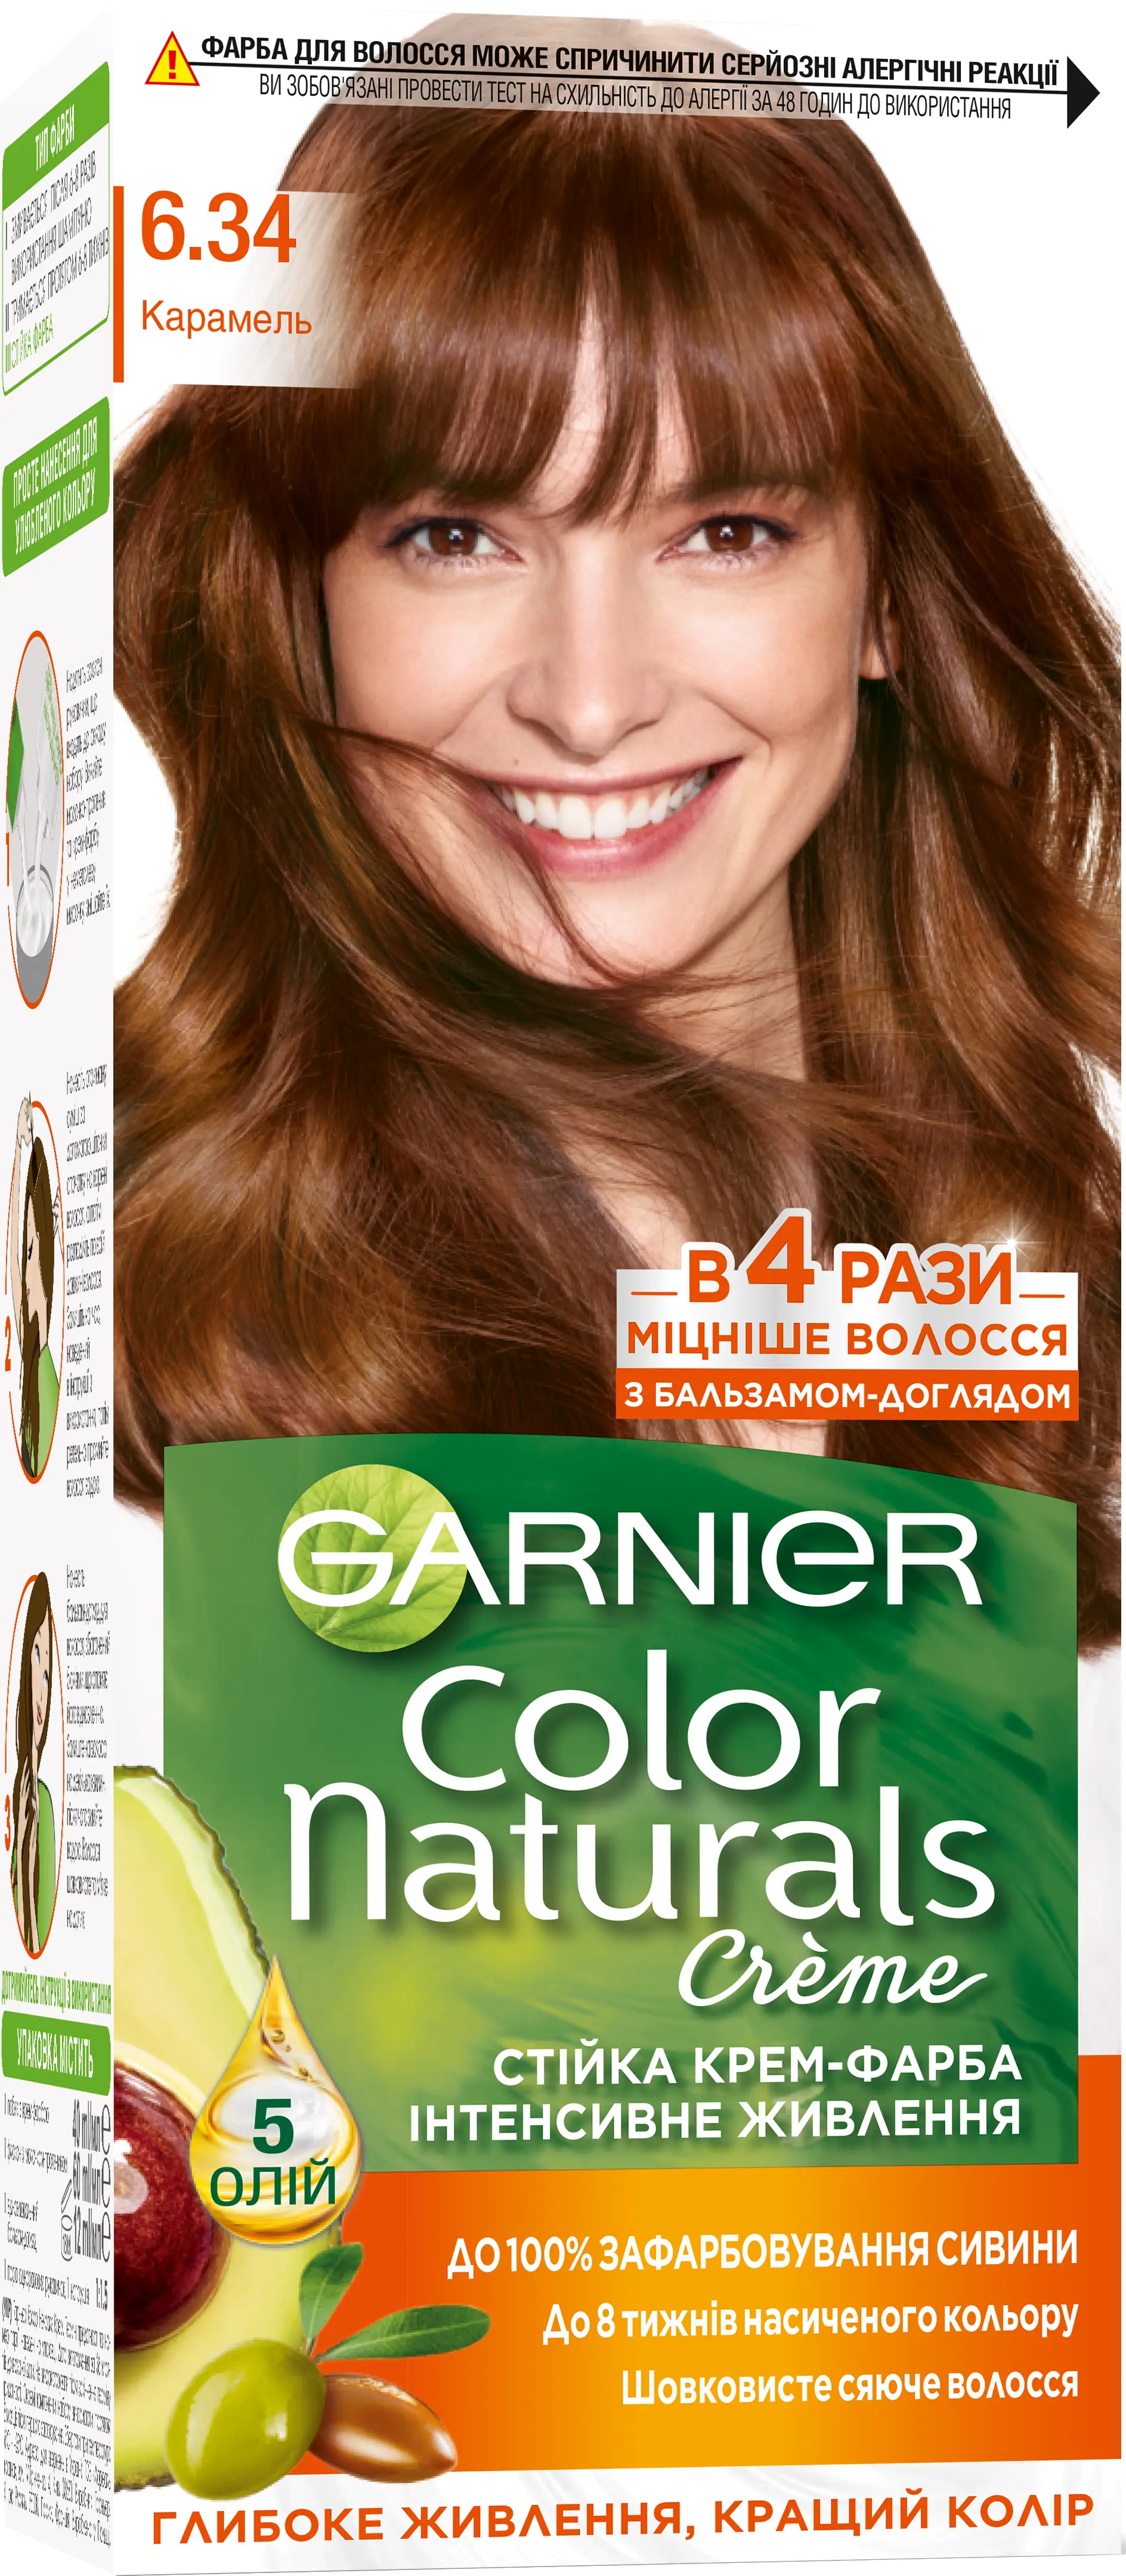 Краска для волос garnier отзывы. Garnier Color naturals краска для волос, 6.34 карамель 110мл. Краска для волос гарньер колор карамель 6.34. Краска гарньер 6.34. Краска для волос Garnier Color naturals 6.34 карамель.